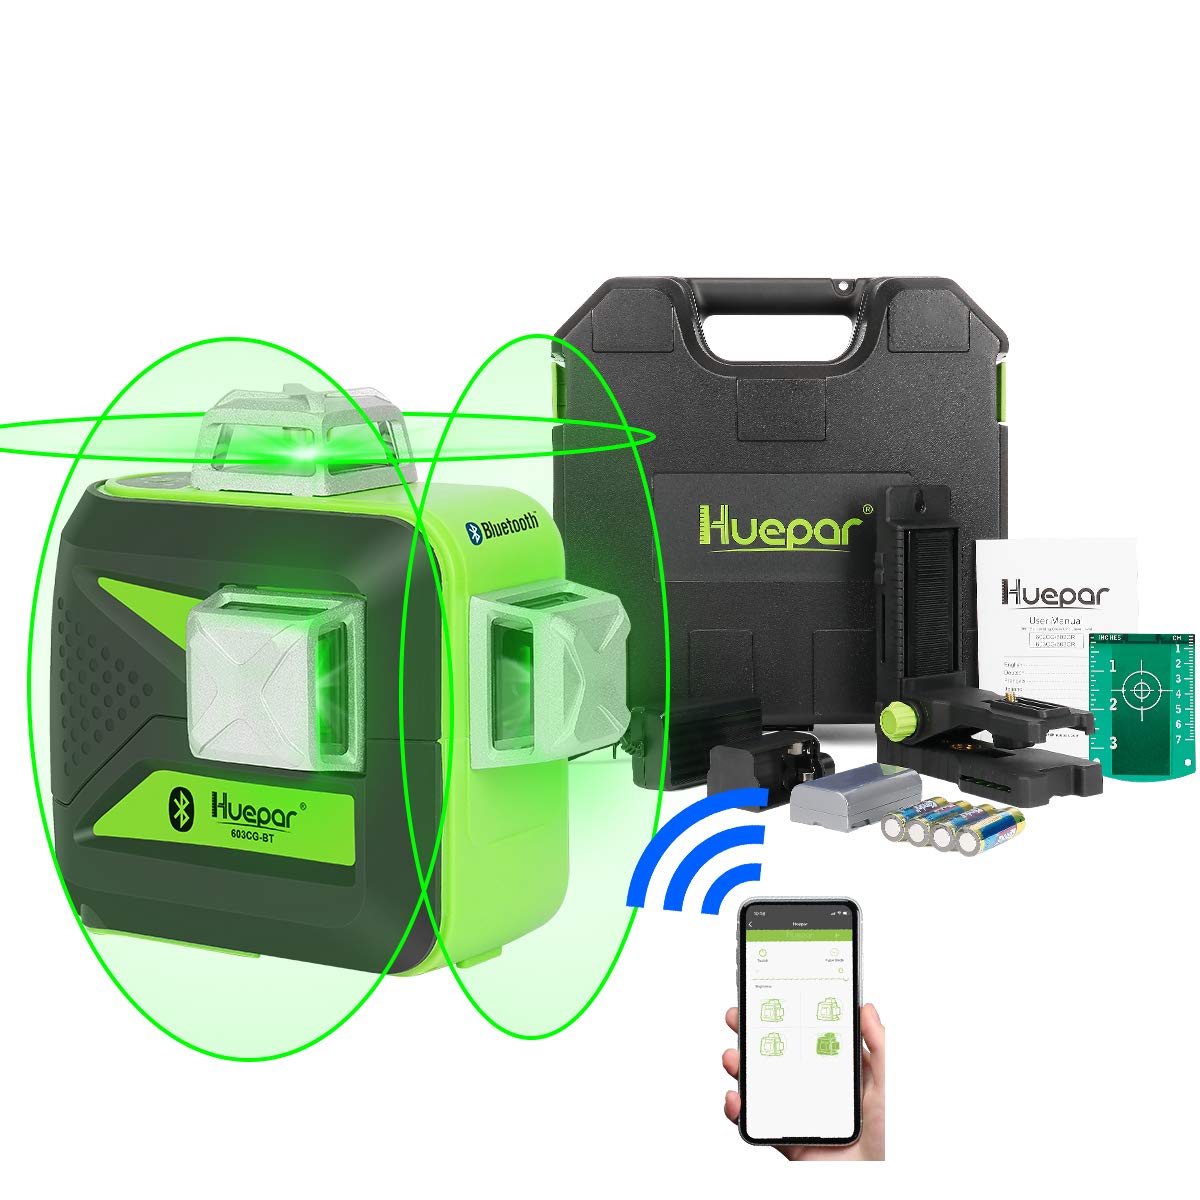 Huepar 603CG-BT - 3 x 360° Green Beam 3D laserska nibela s Bluetooth vezom